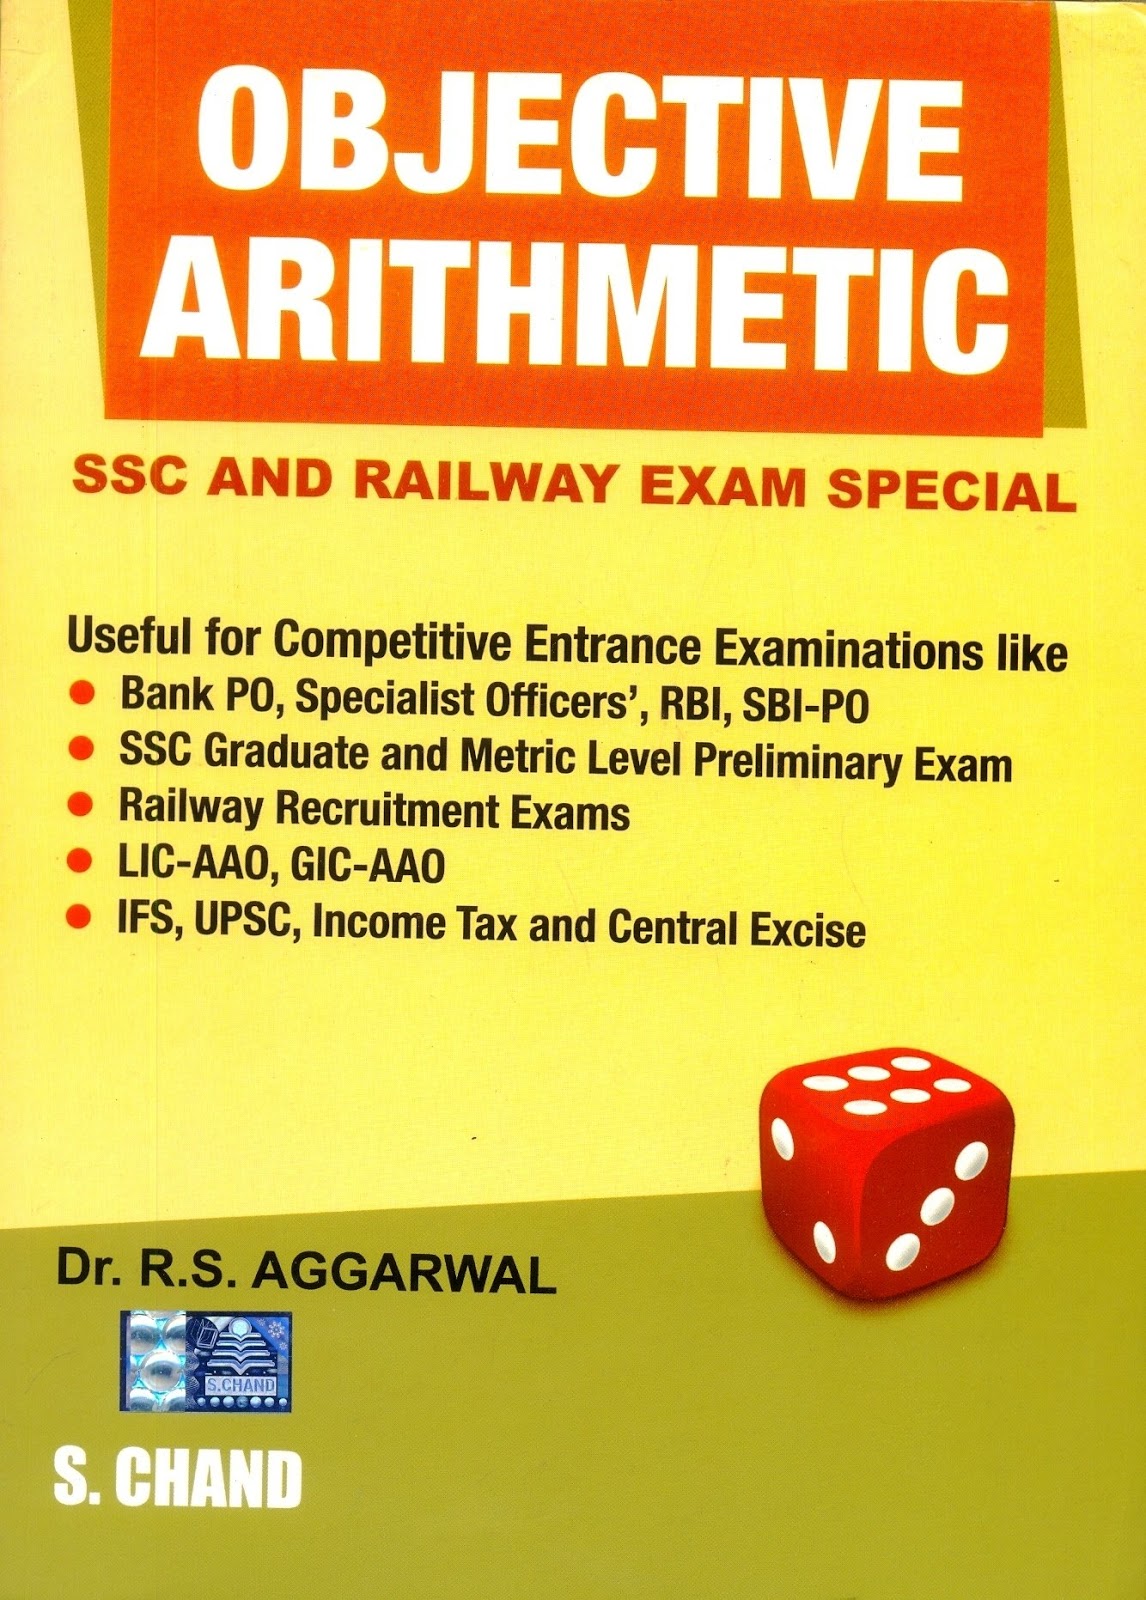 free download rs aggarwal quantitative aptitude book